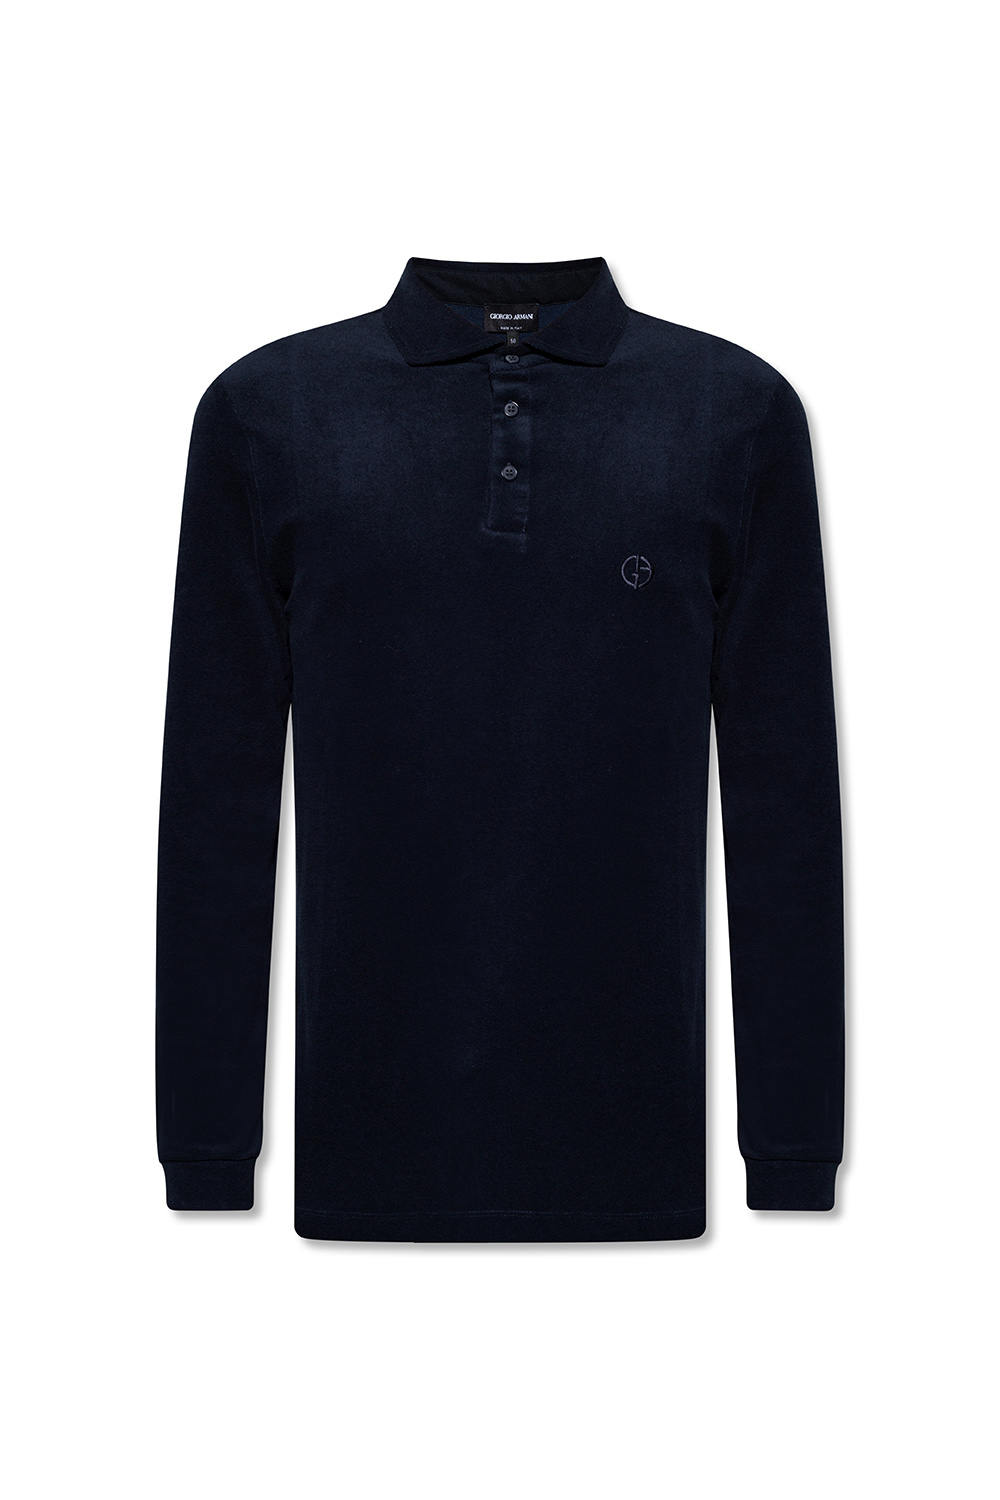 Giorgio Armani buy polo ralph lauren essential t shirt